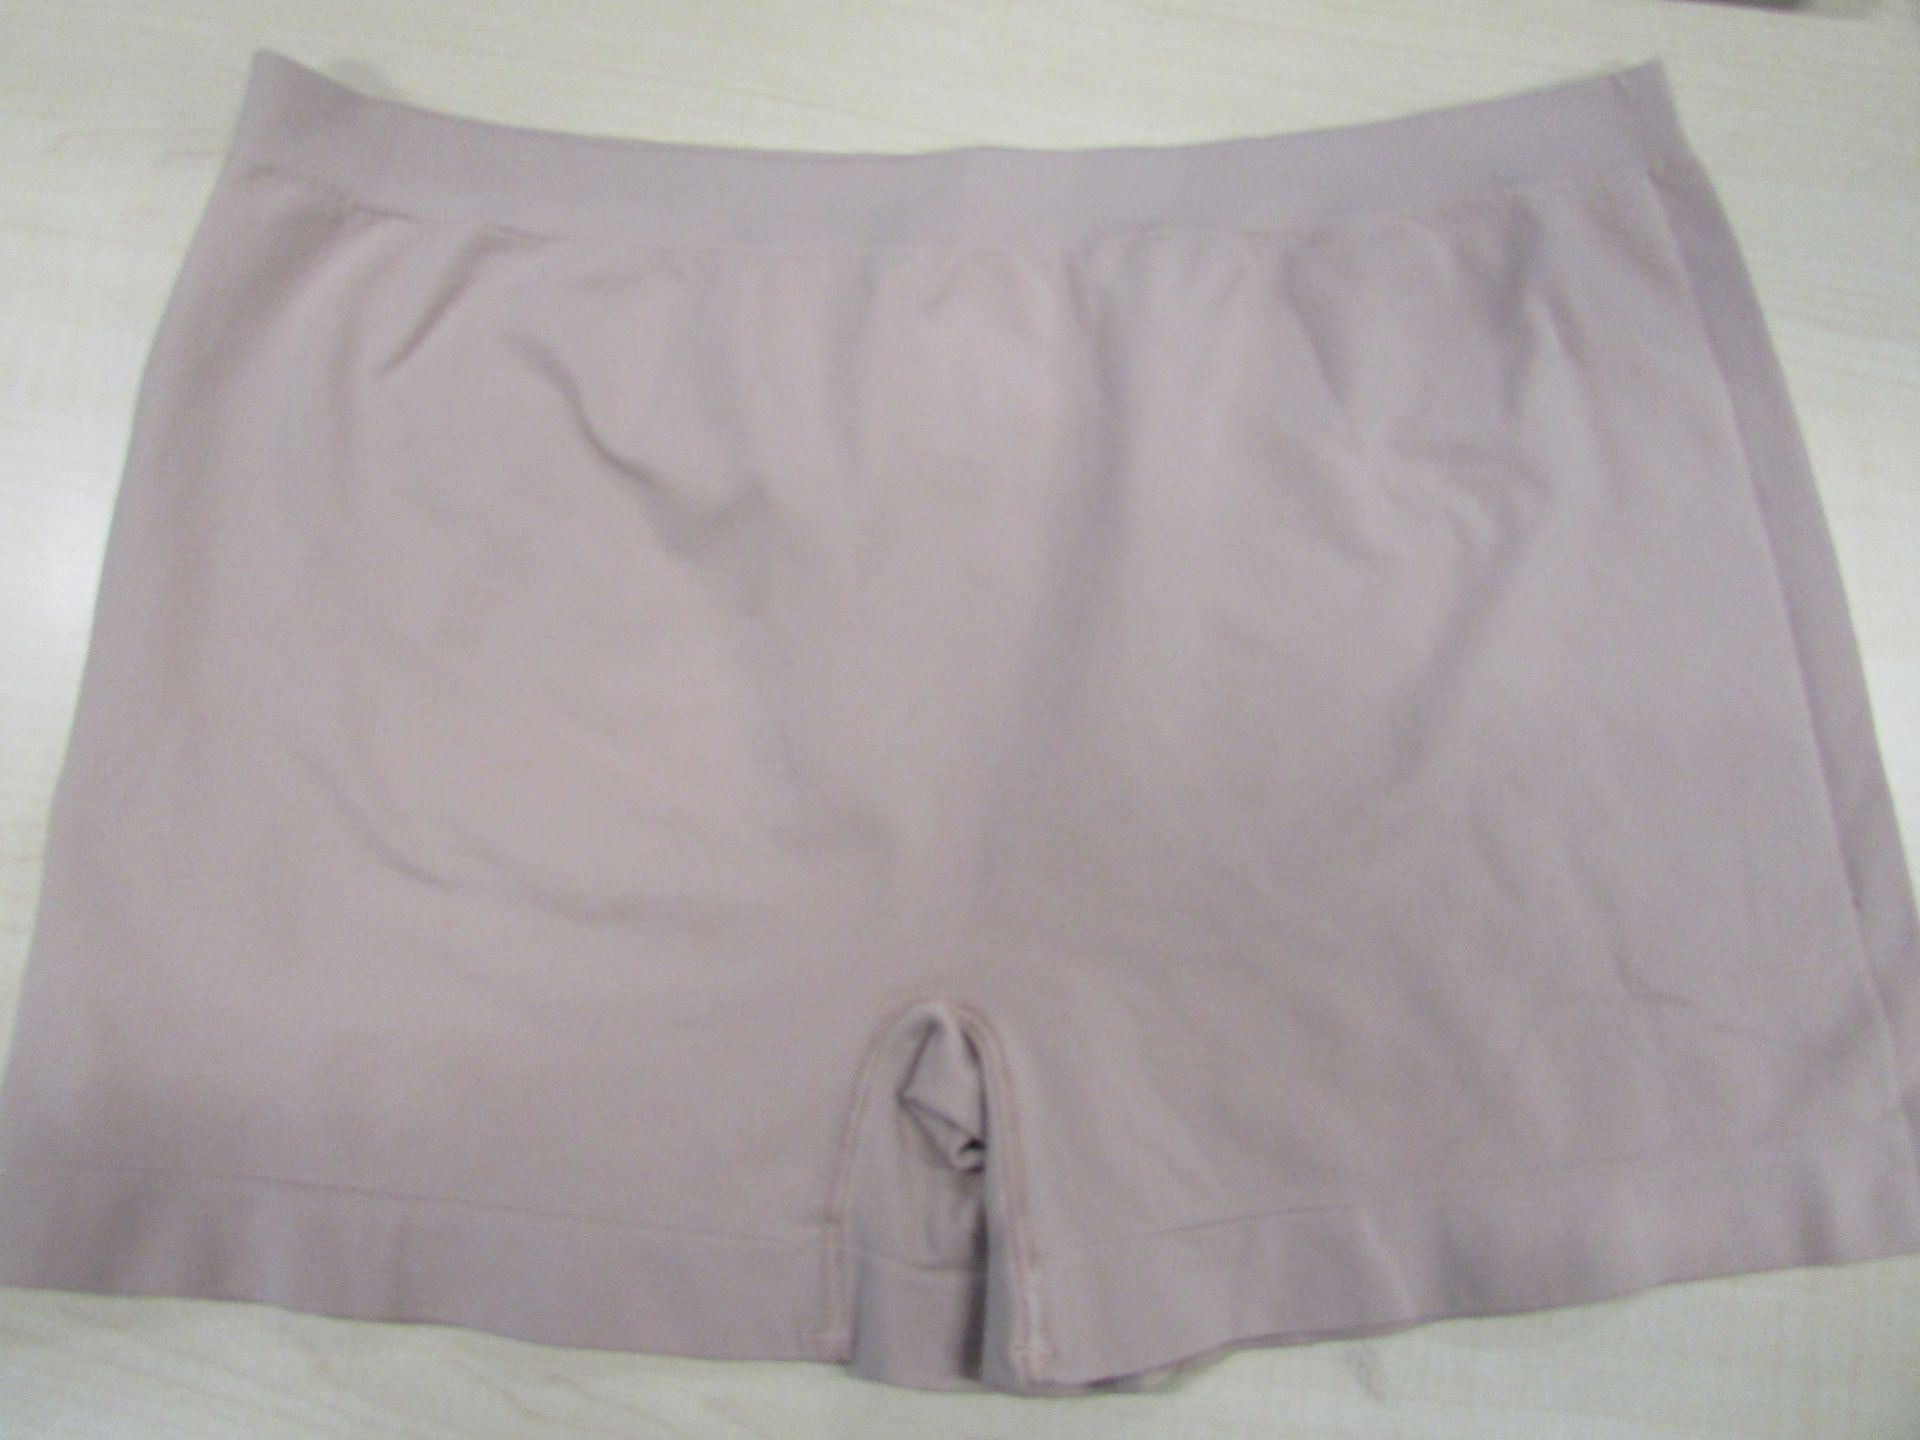 Ladys Figure Improving Pants 4 Pairs (Beige) (Us Size 4X)